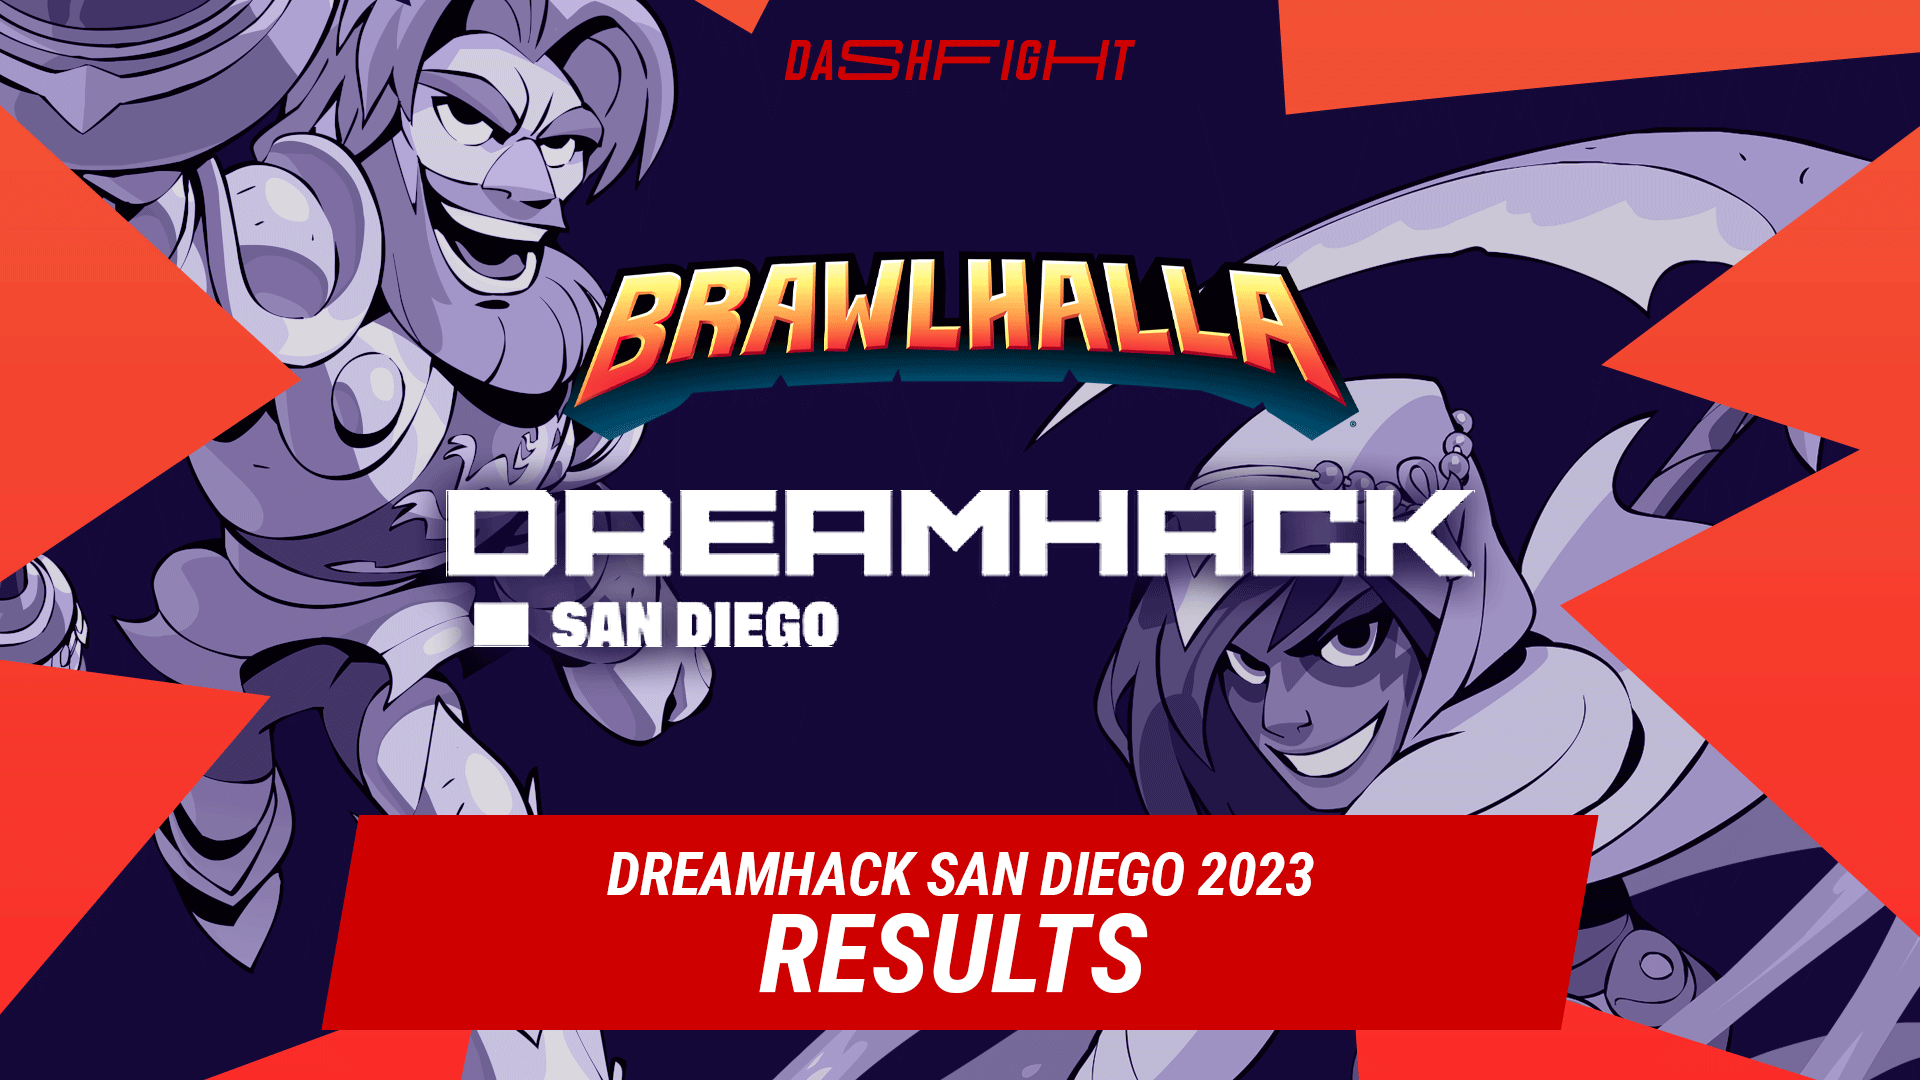 Brawlhalla at DreamHack San Diego 2023: The Champion’s Power